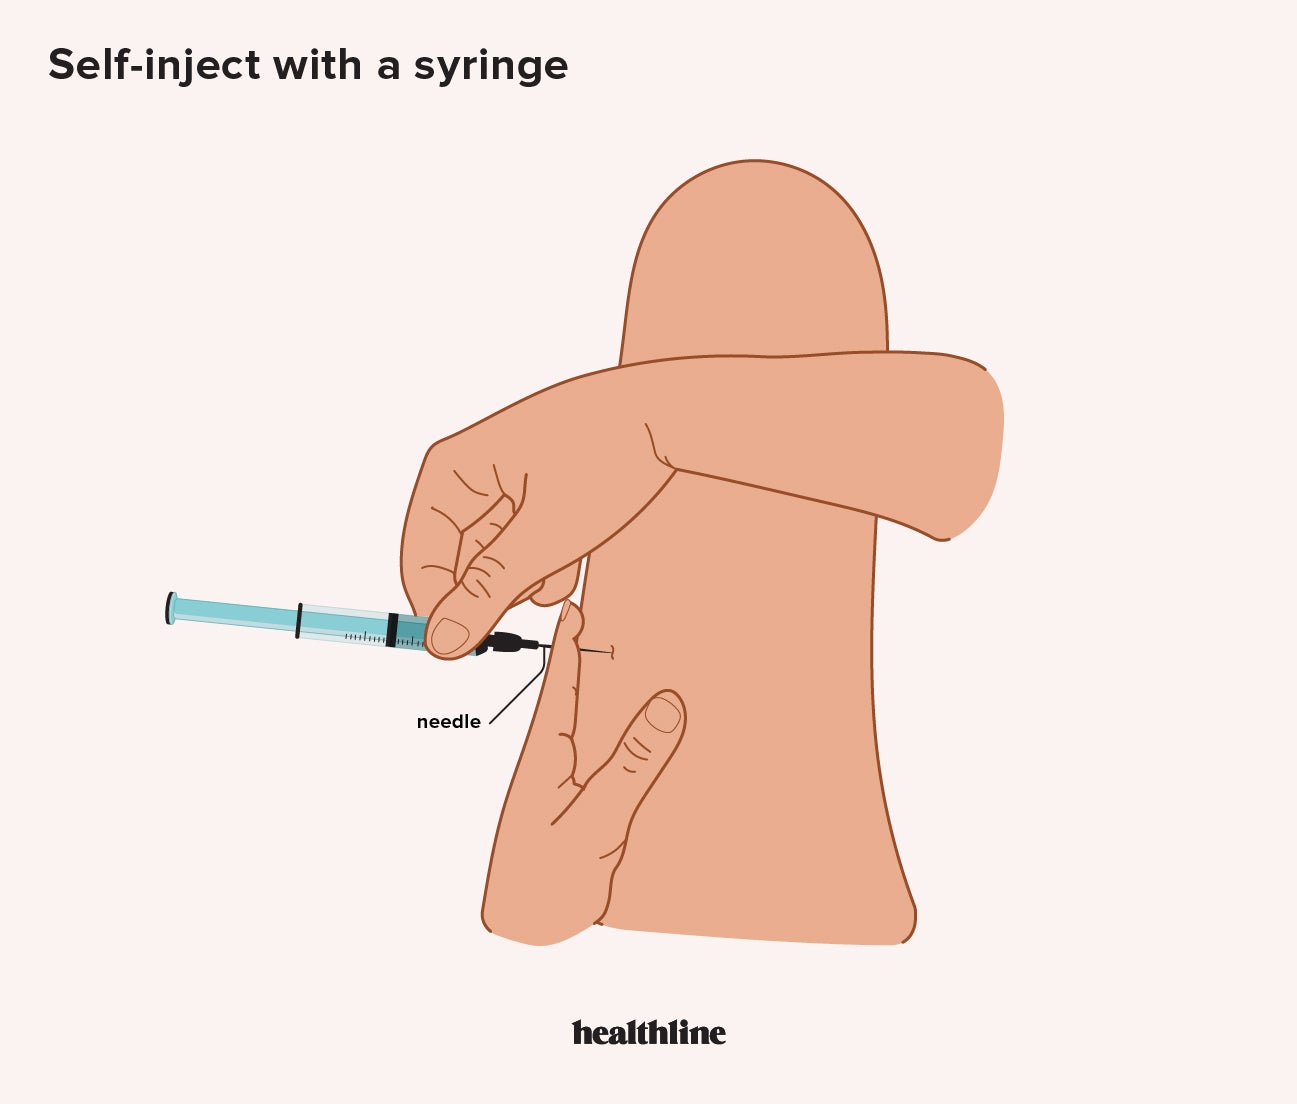 intramuscular injection sites children